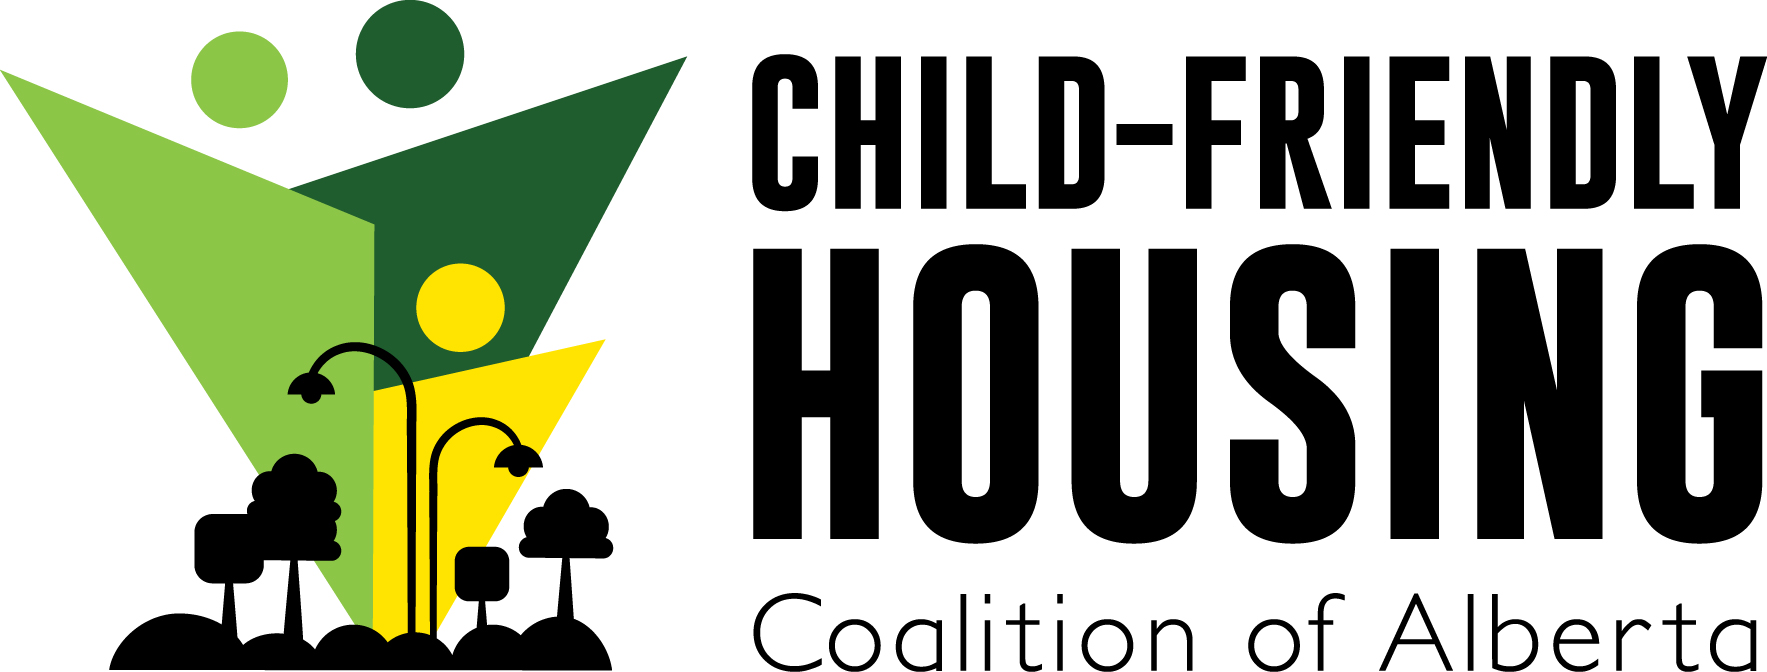 Child Friendly Housing Coalition Alberta